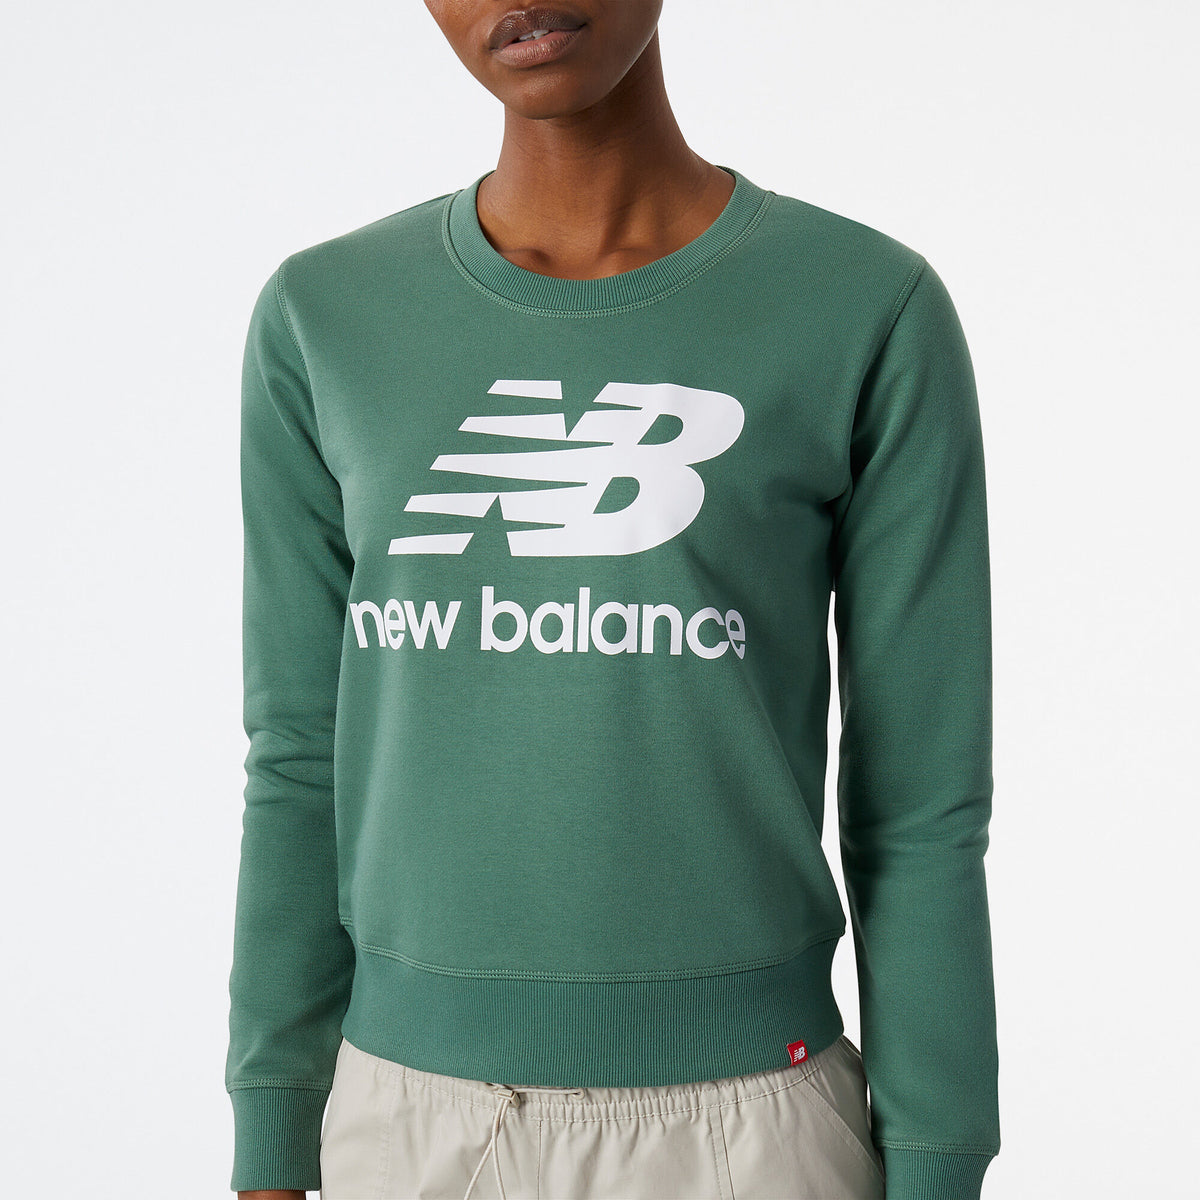 New Balancenői pulóver, zöld - MYBRANDS.HU